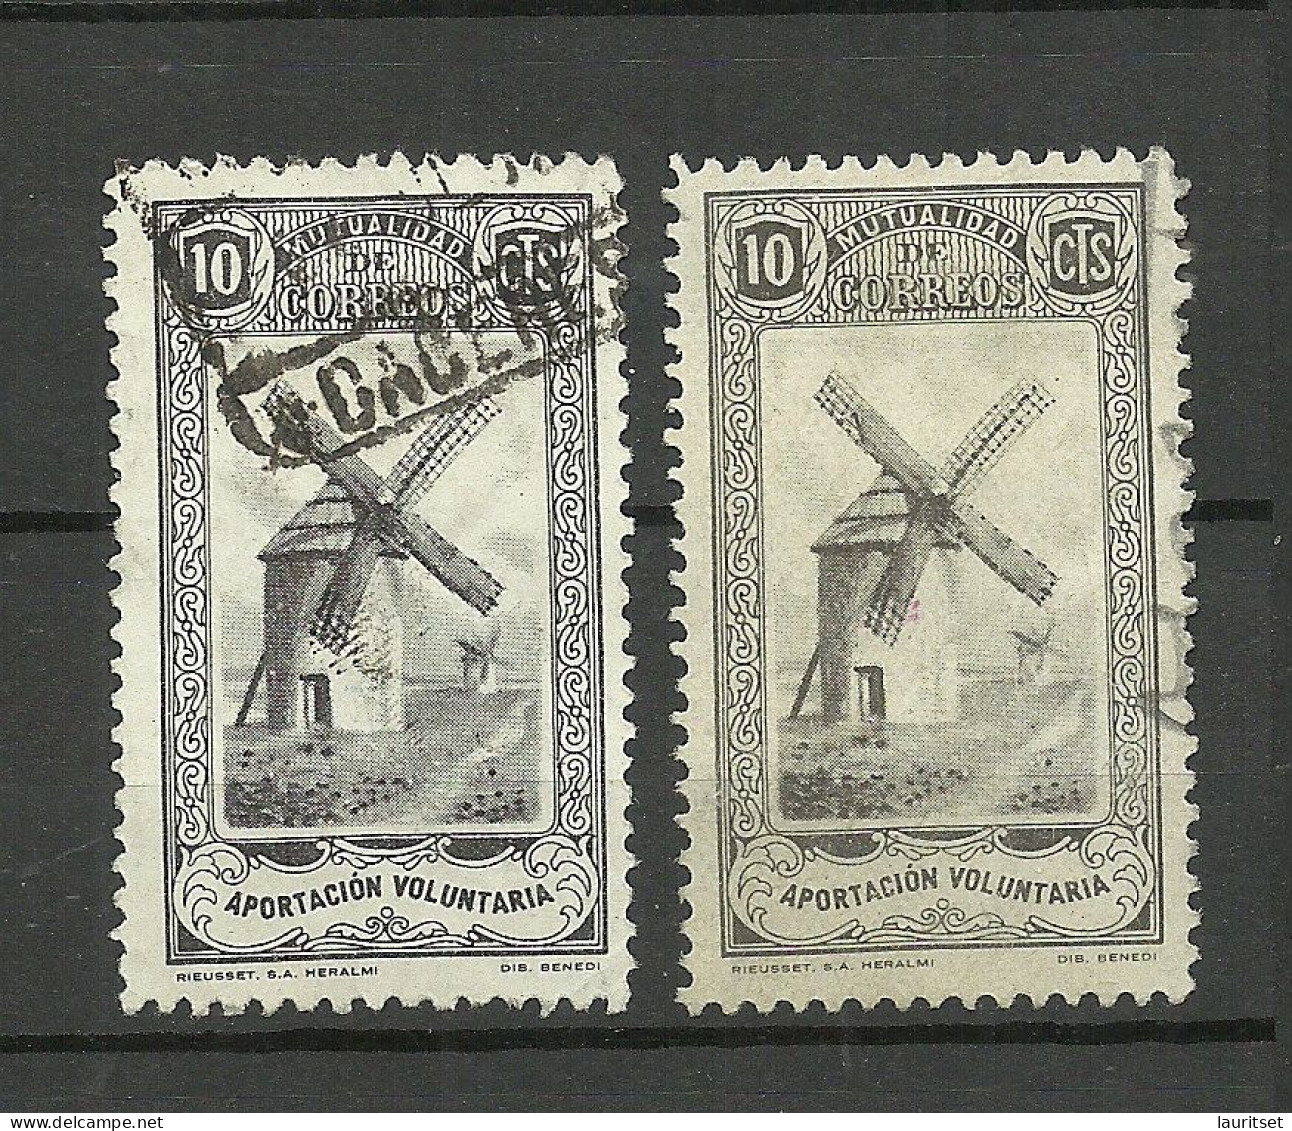 SPAIN Spanien Espana 1930ies Civil War Local Carity Wohlfahrt Wind Mill Windmühle - Color Chades, 2 Stamps, O - Mühlen